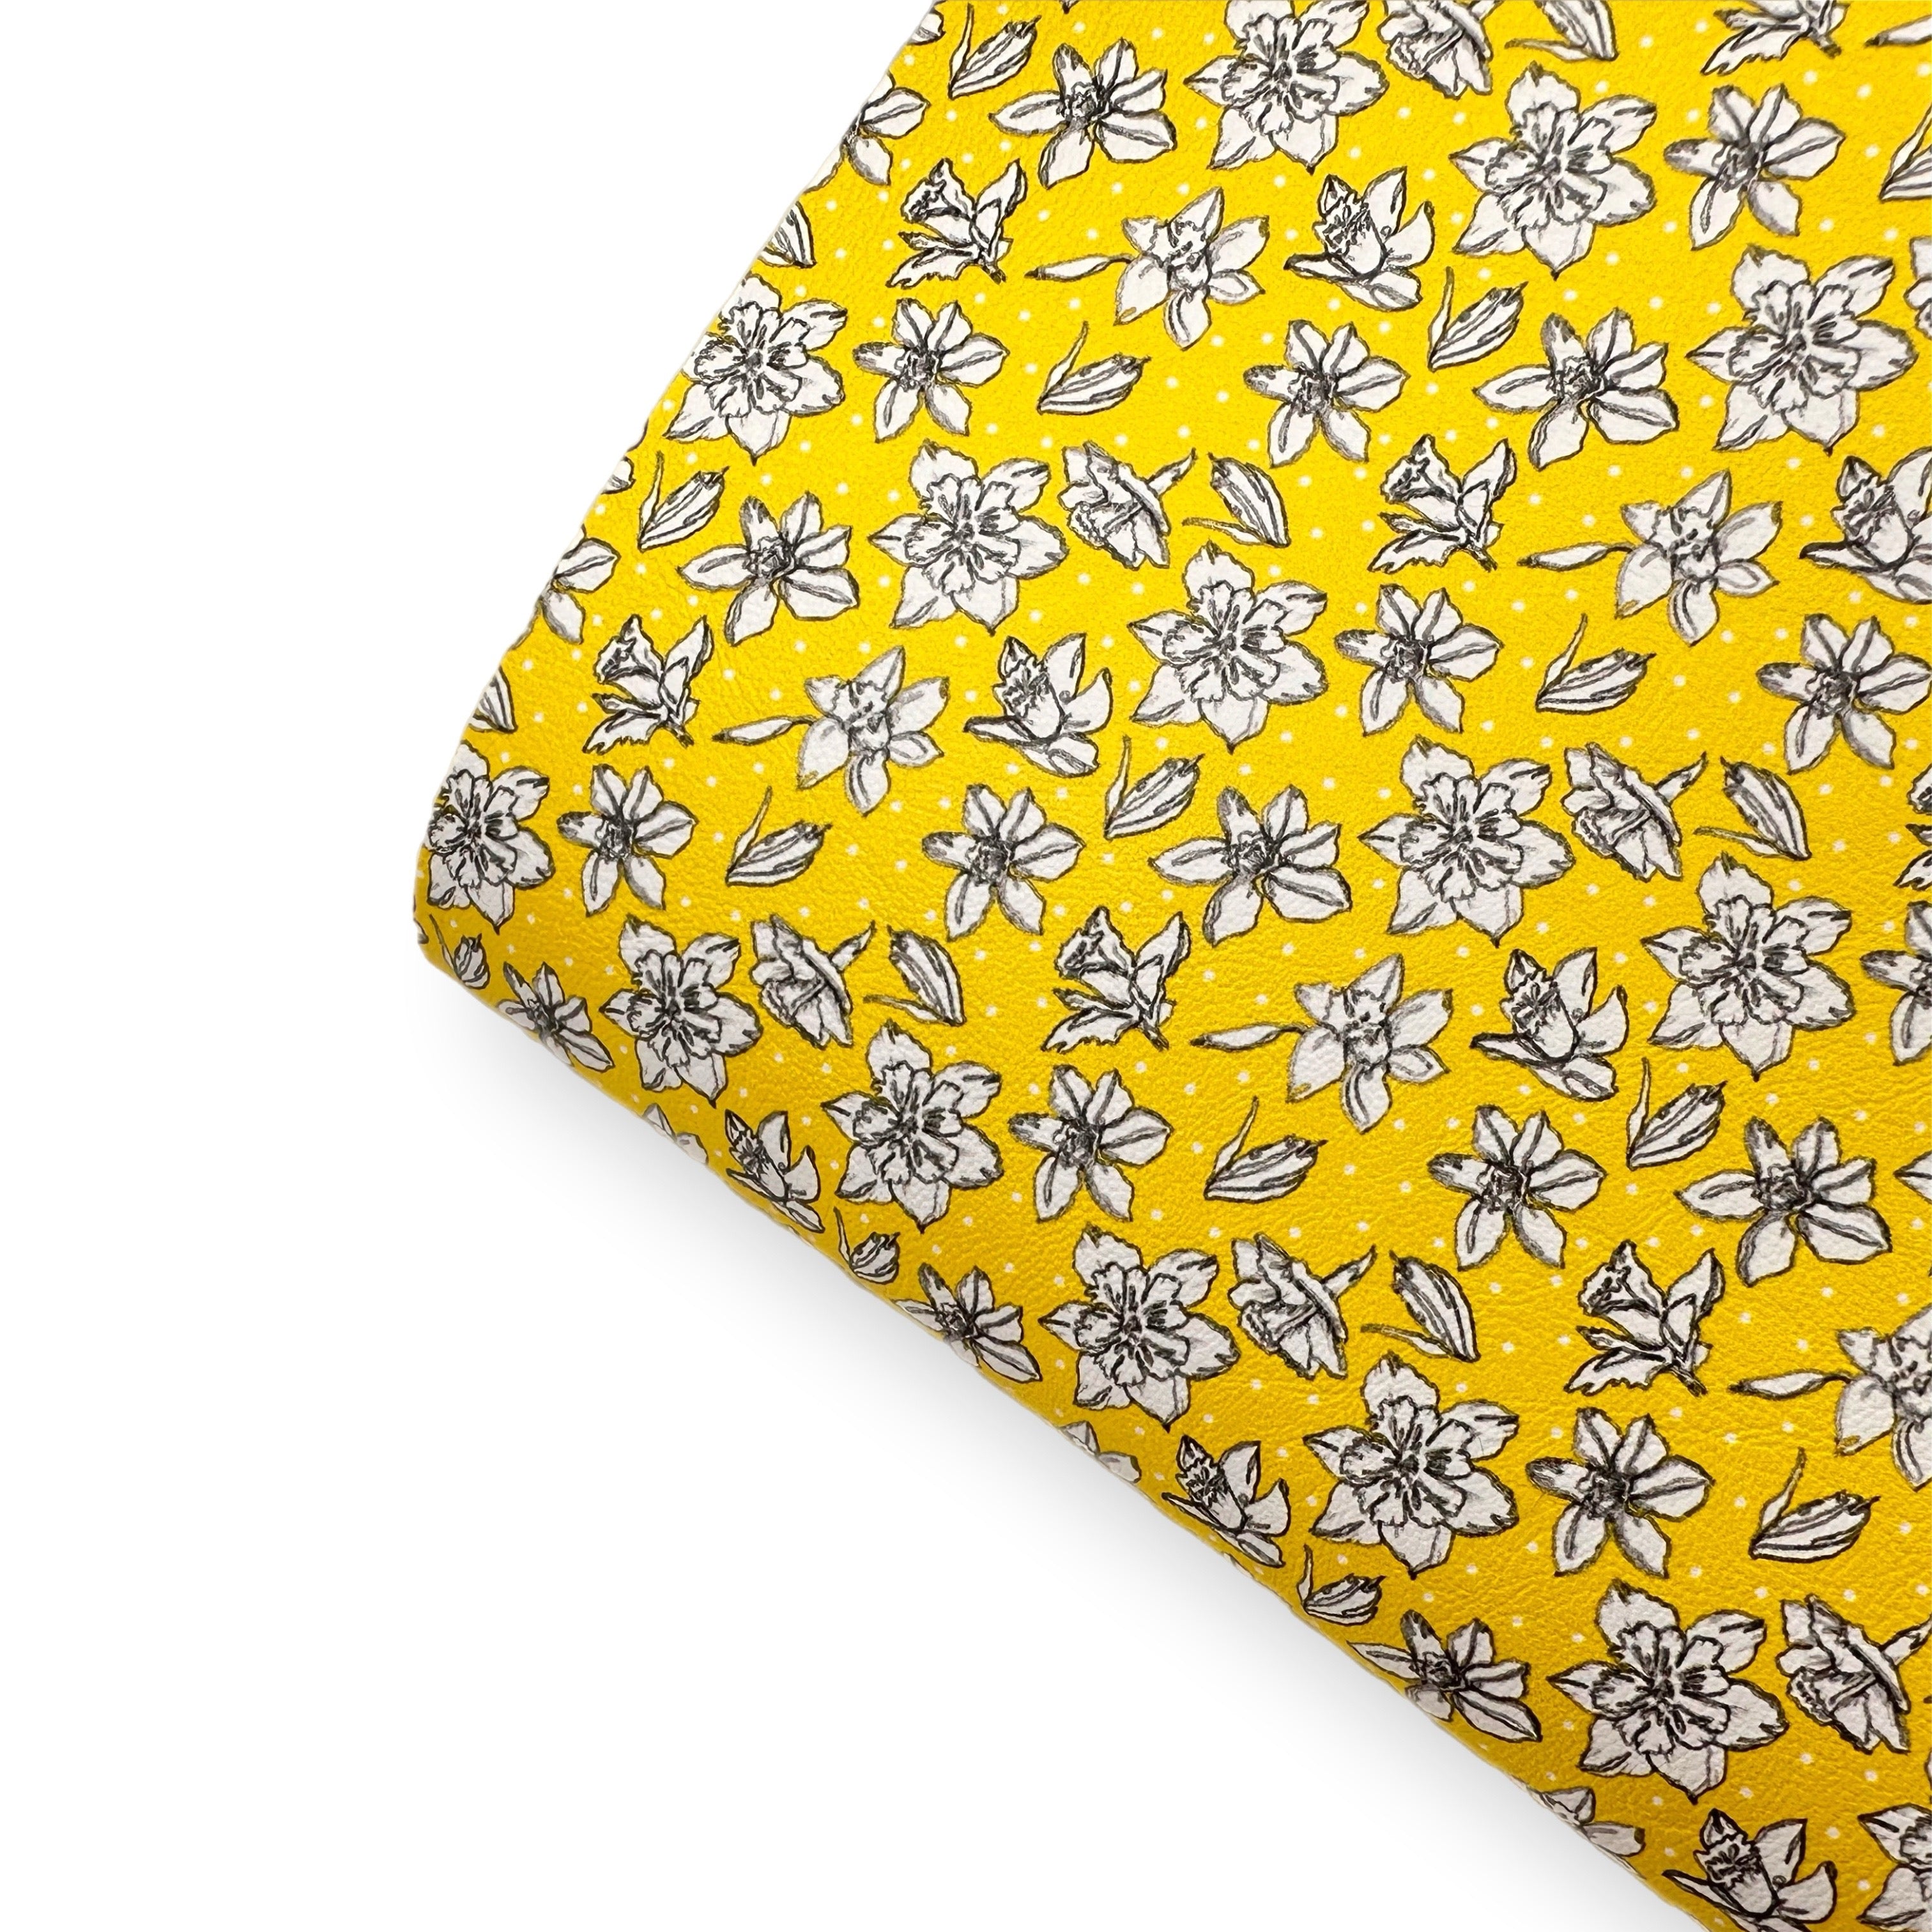 Daffodils Polka Dot Premium Faux Leather Fabric